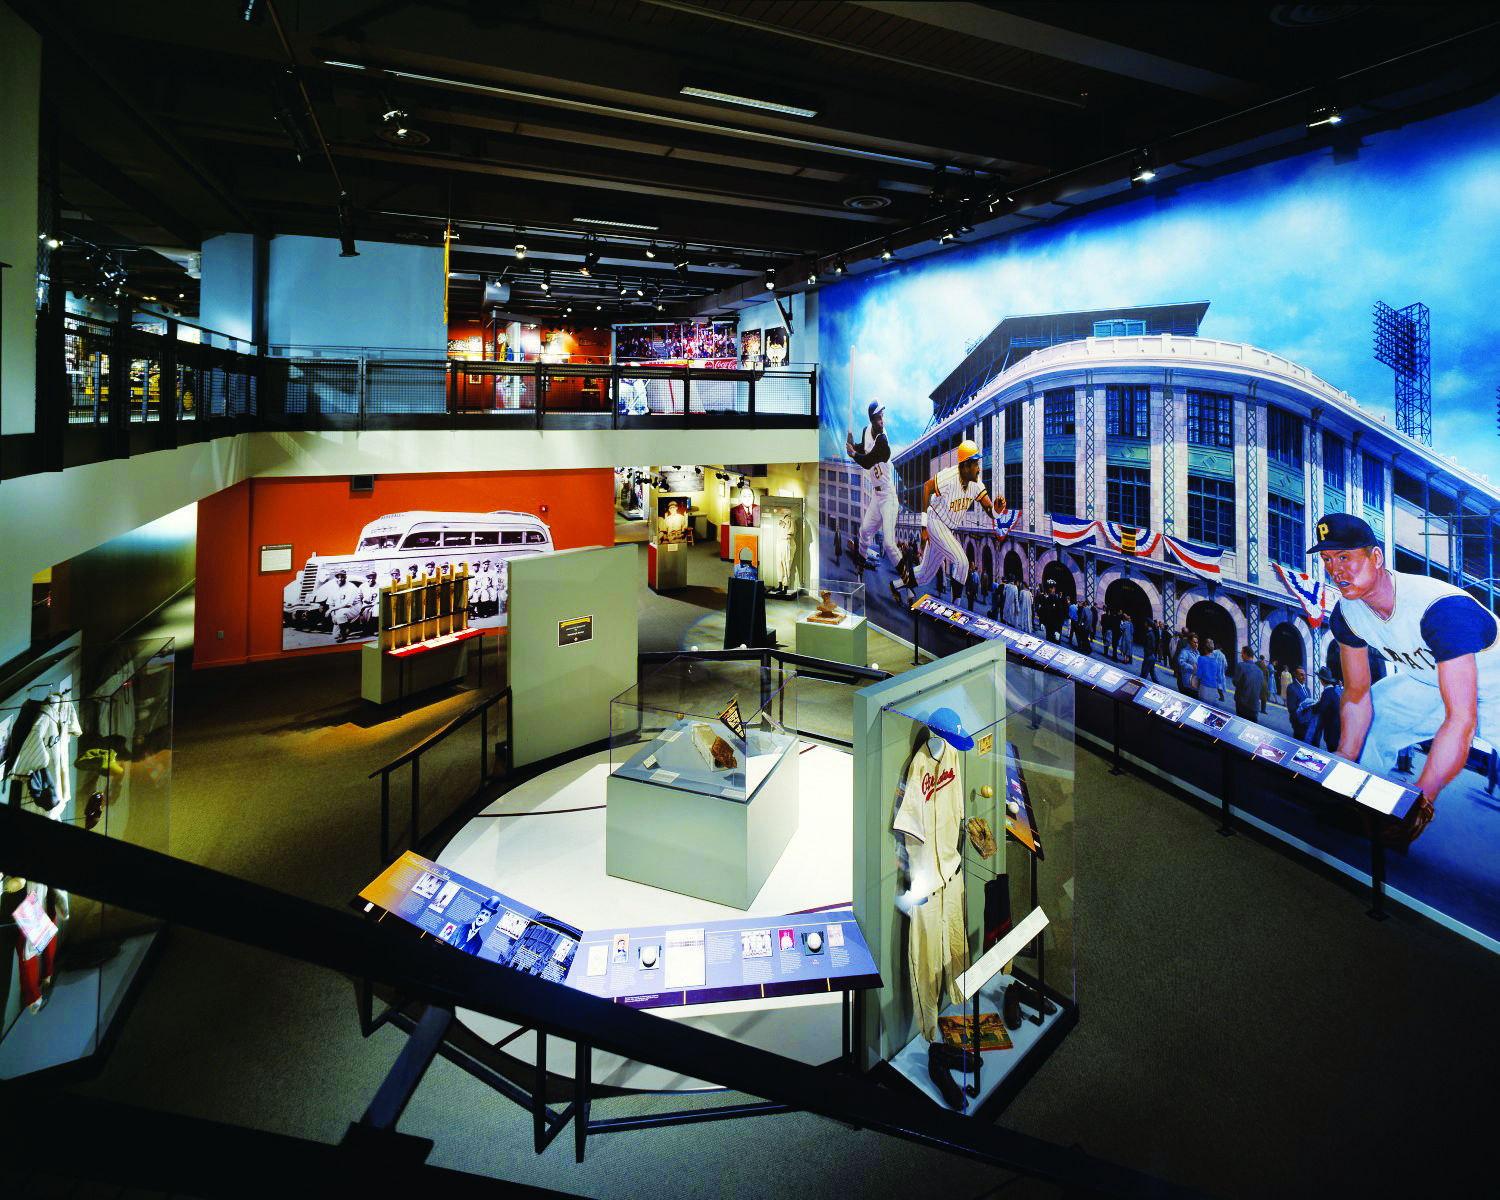 senator john heinz history center, pennsylvania's largest history museum